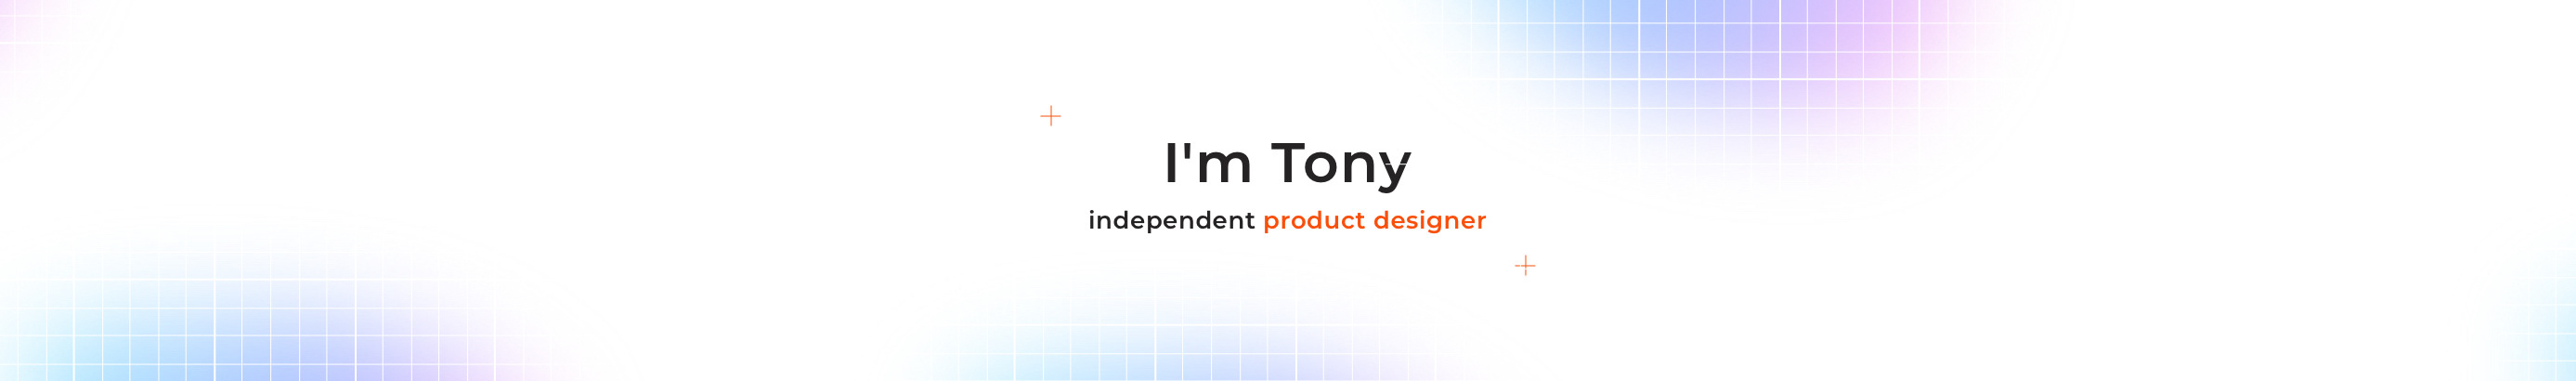 Tony B's profile banner